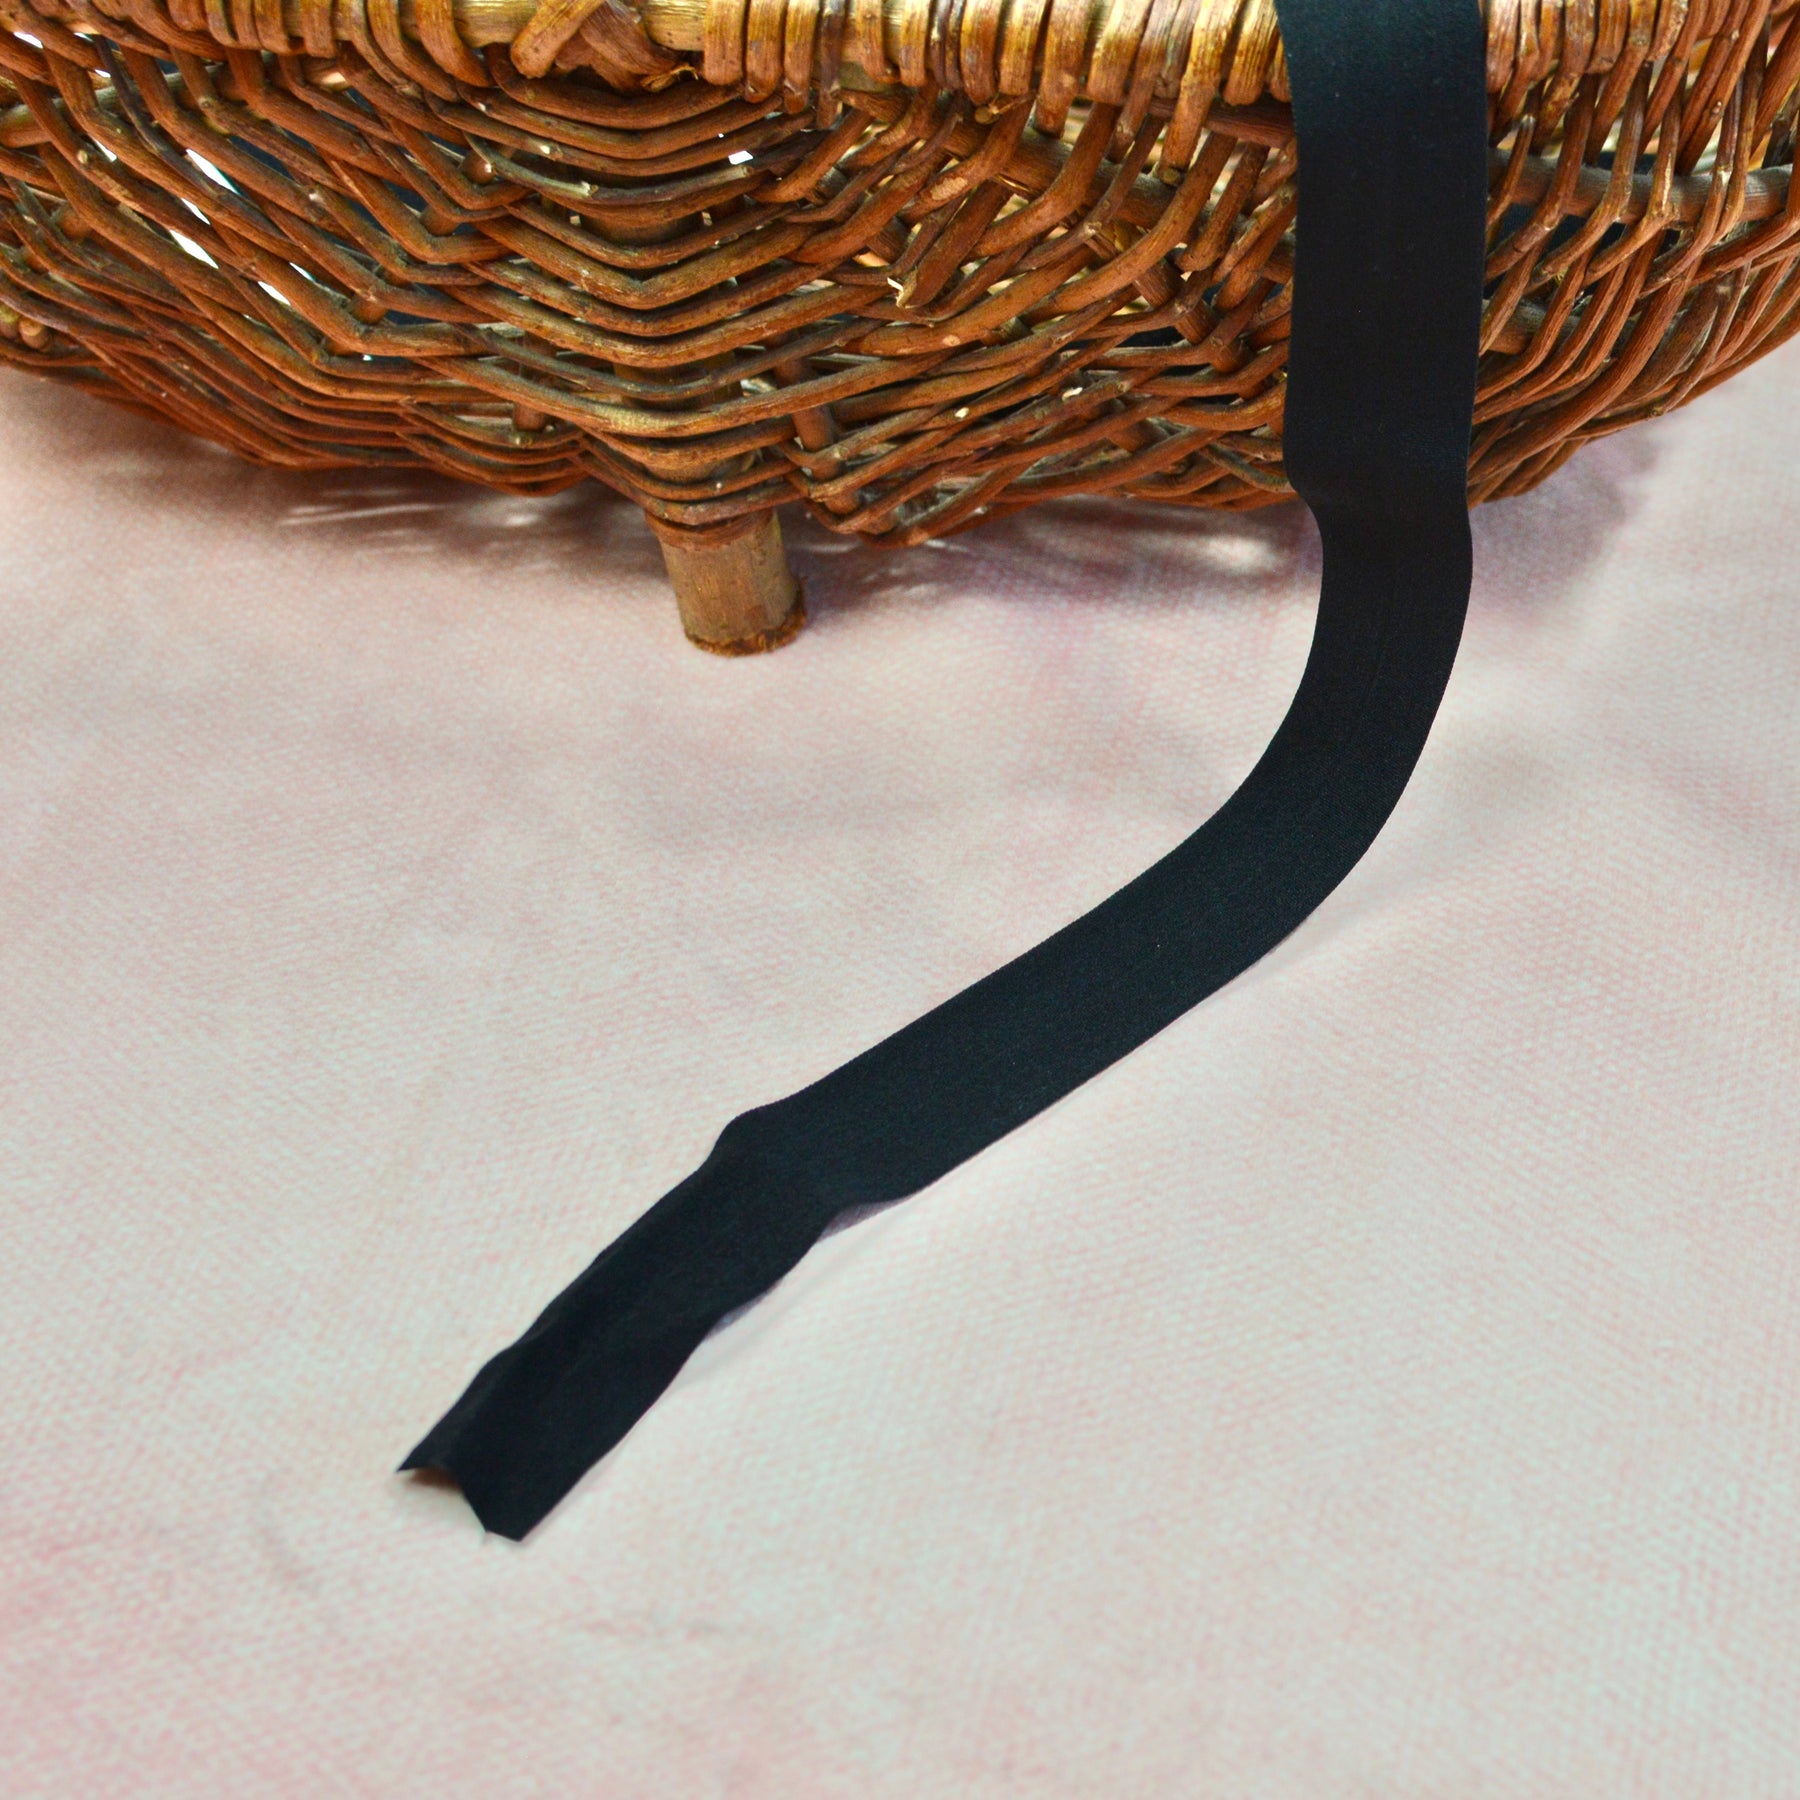 Faltgummi / Falzgummi / elastisches Einfassband 30m schwarz Fabric poshpinks